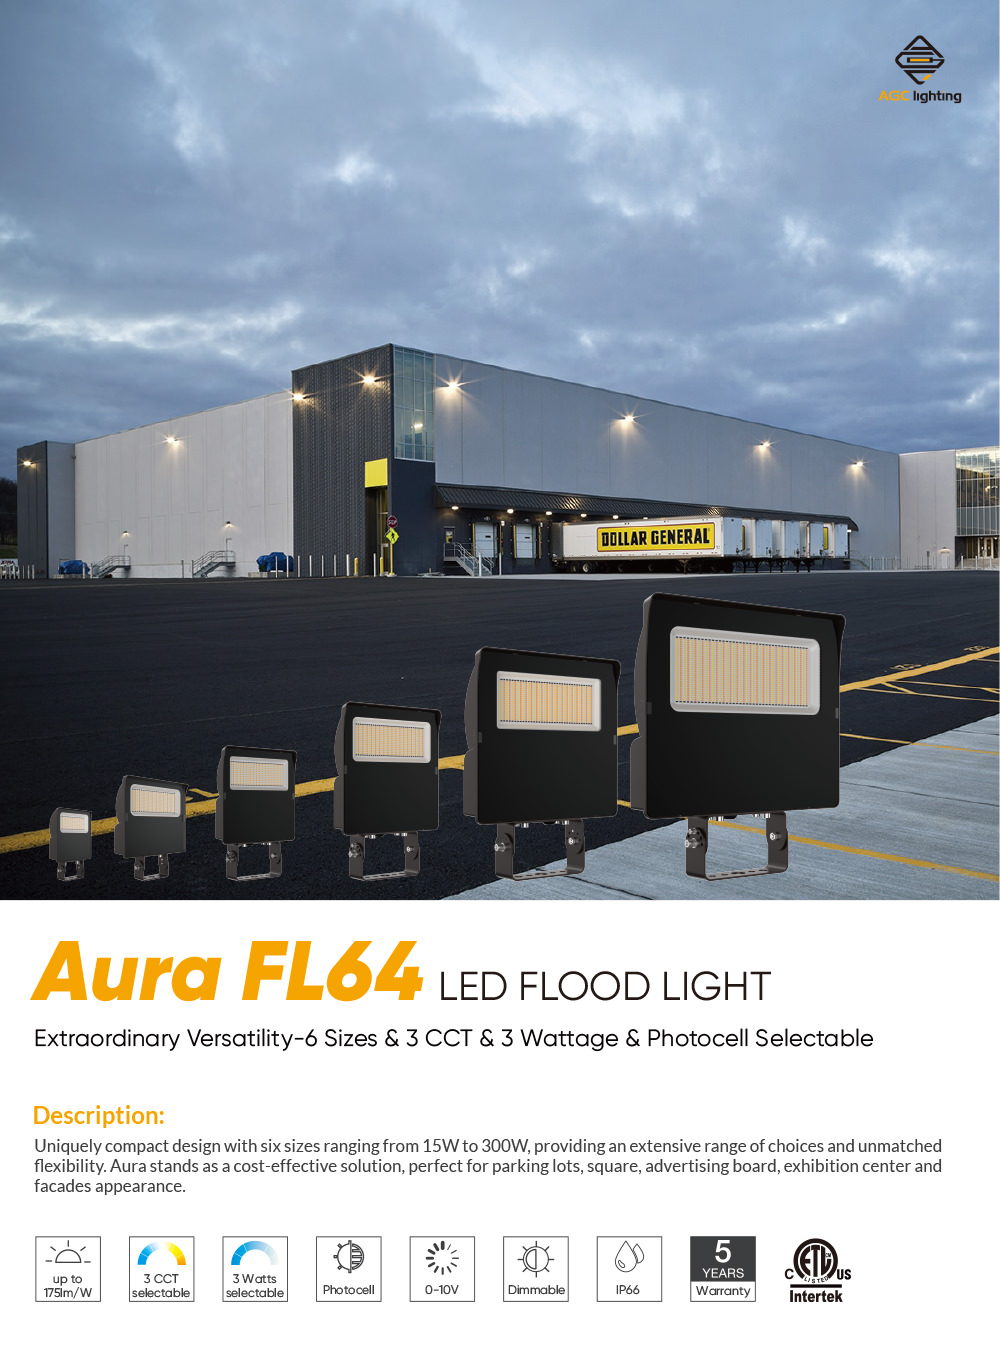 FL64 LED Flood Light Presentation 01